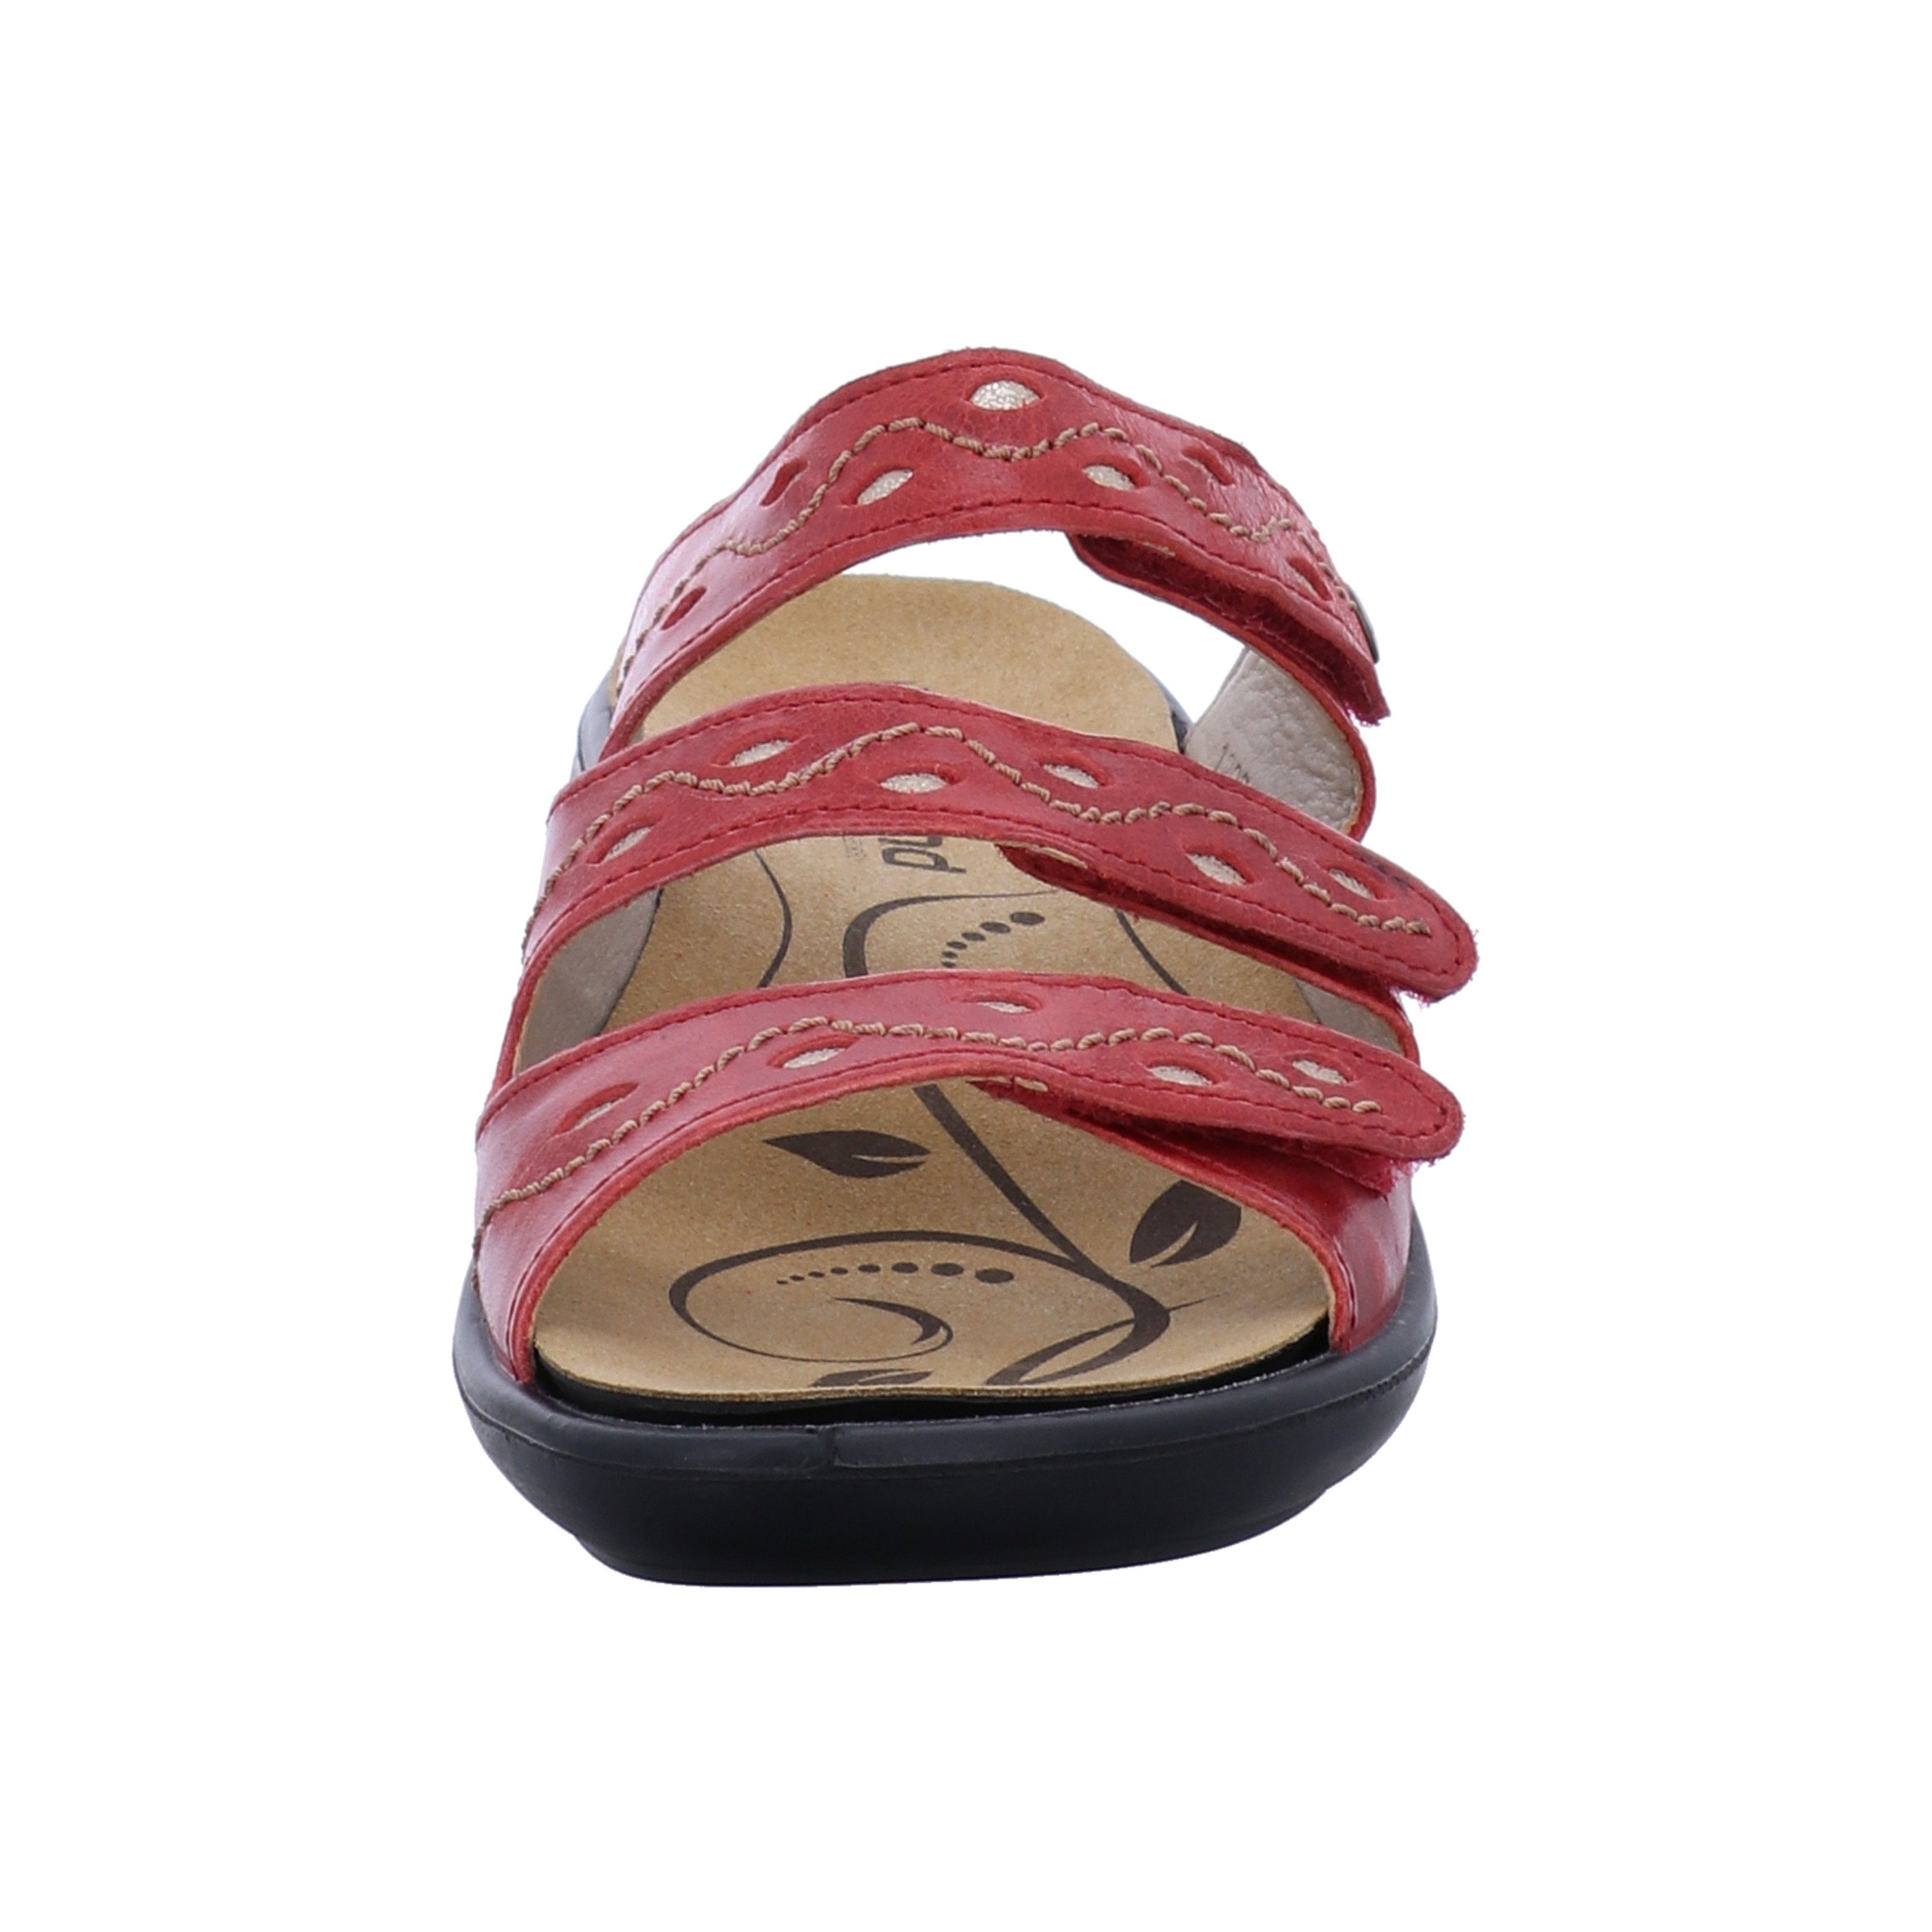 Schuhe Sandalen Westland Ibiza 66, rot Sandale